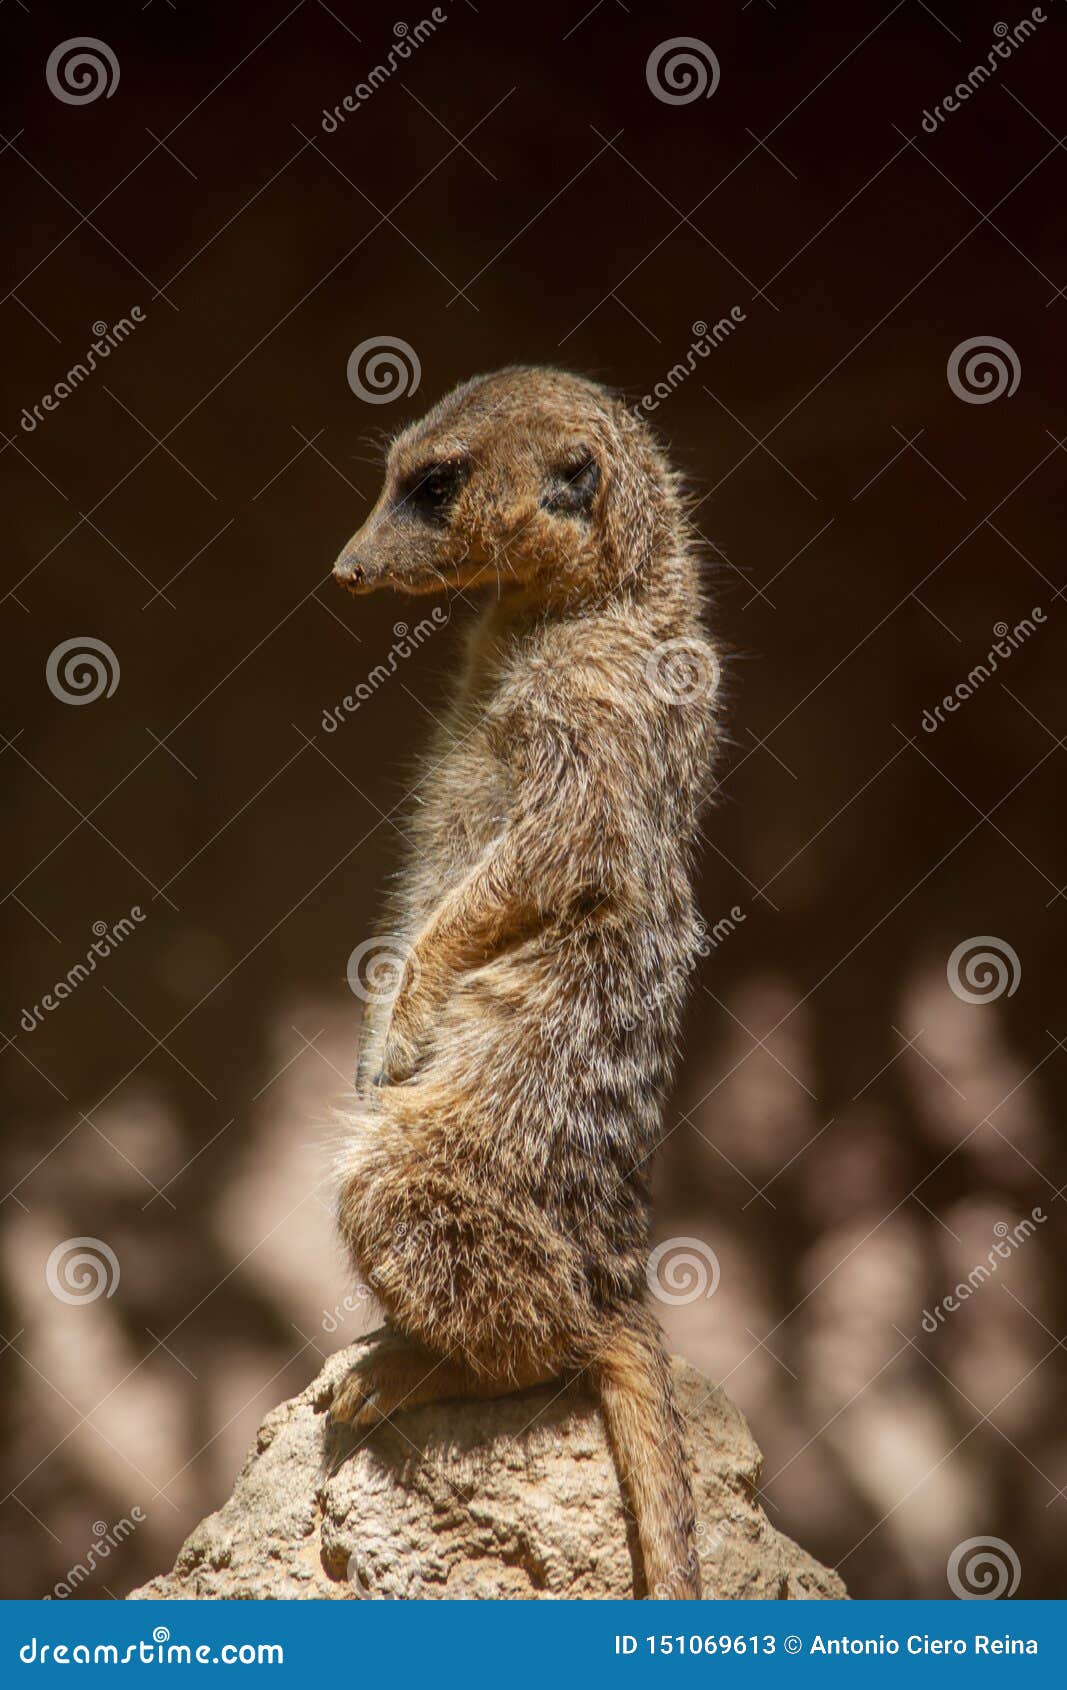 especie animal, suricata suricatta